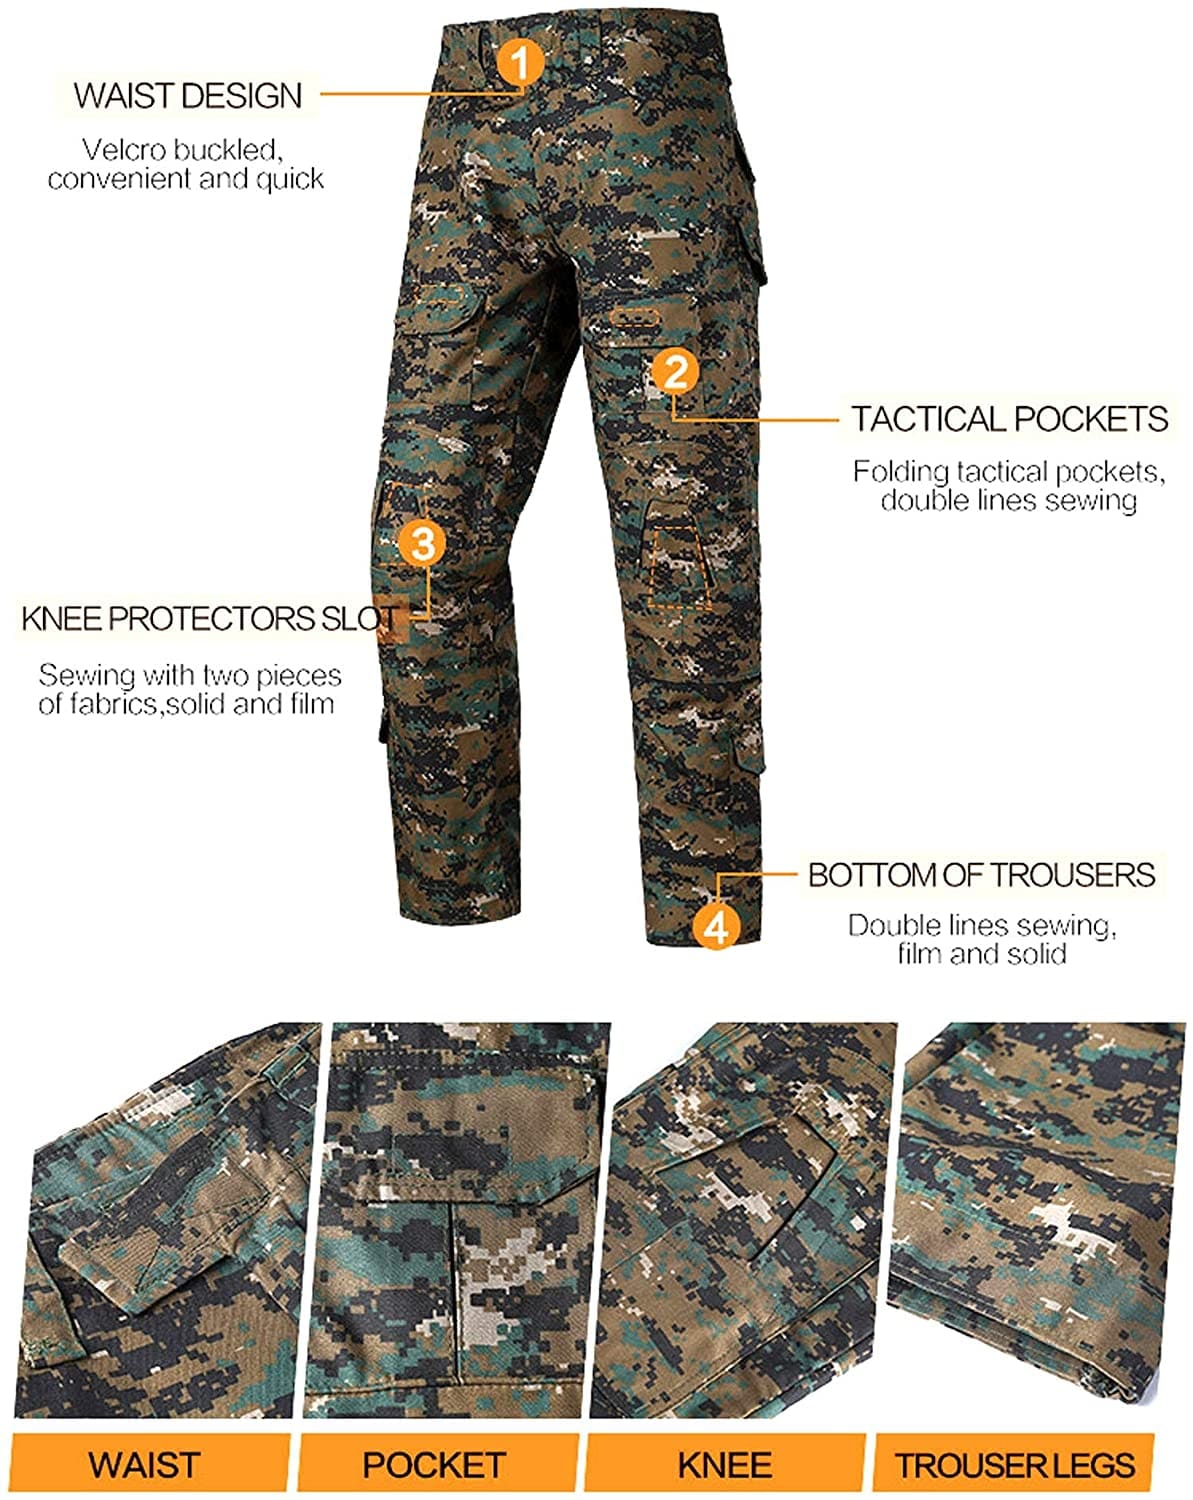 YUSHOW Men's Airsoft Multicam Tactical Military RipStop Uniform Pants